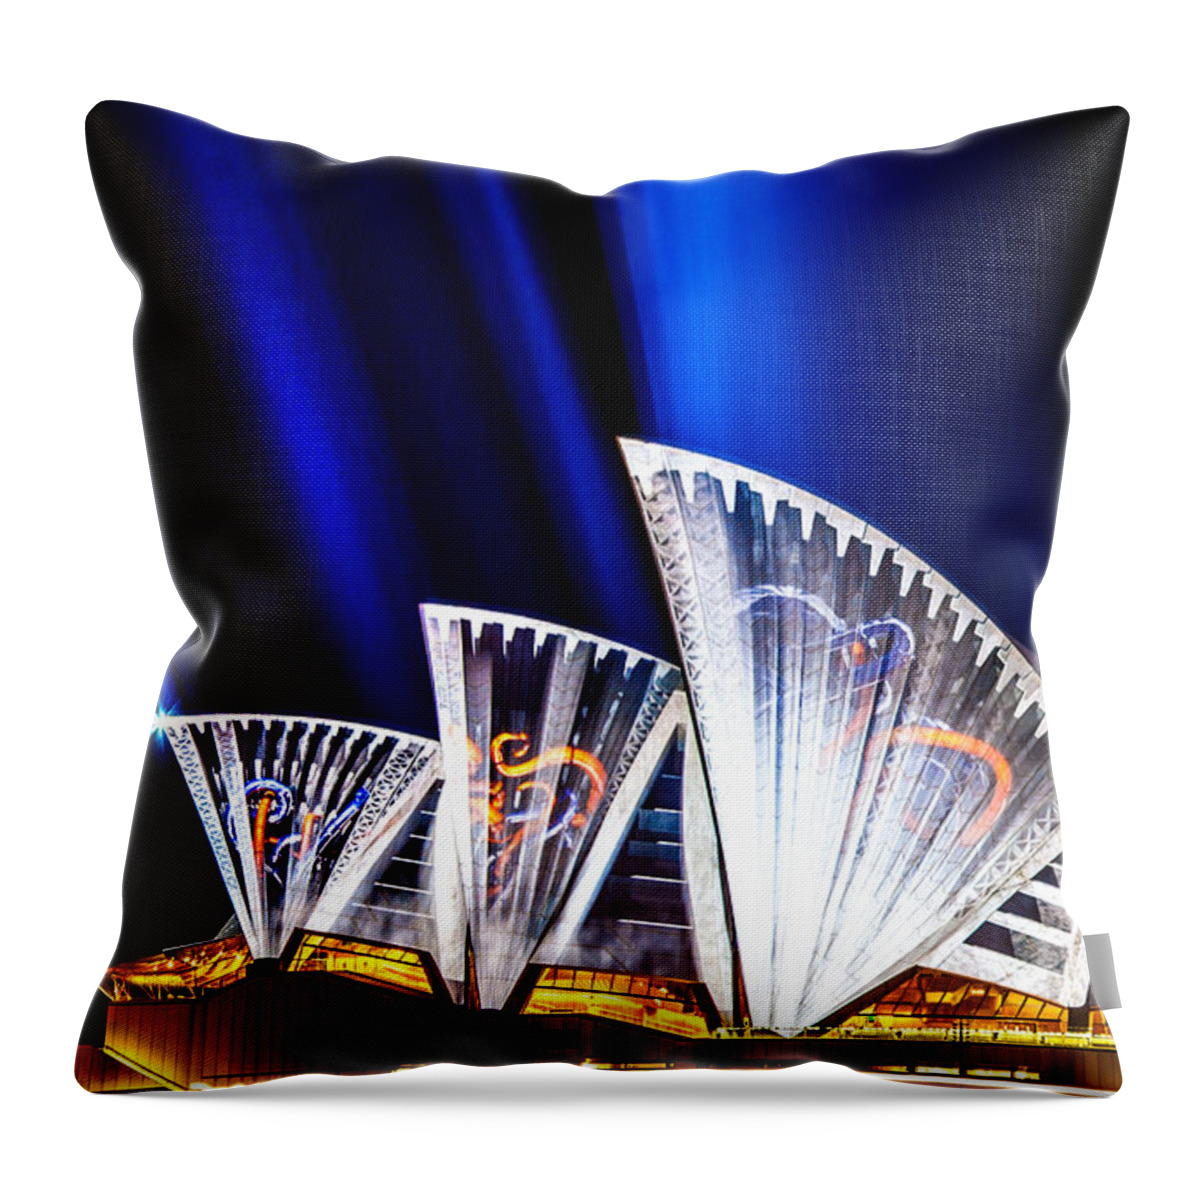 Sydney Throw Pillow featuring the photograph Sparkling Blades by Az Jackson